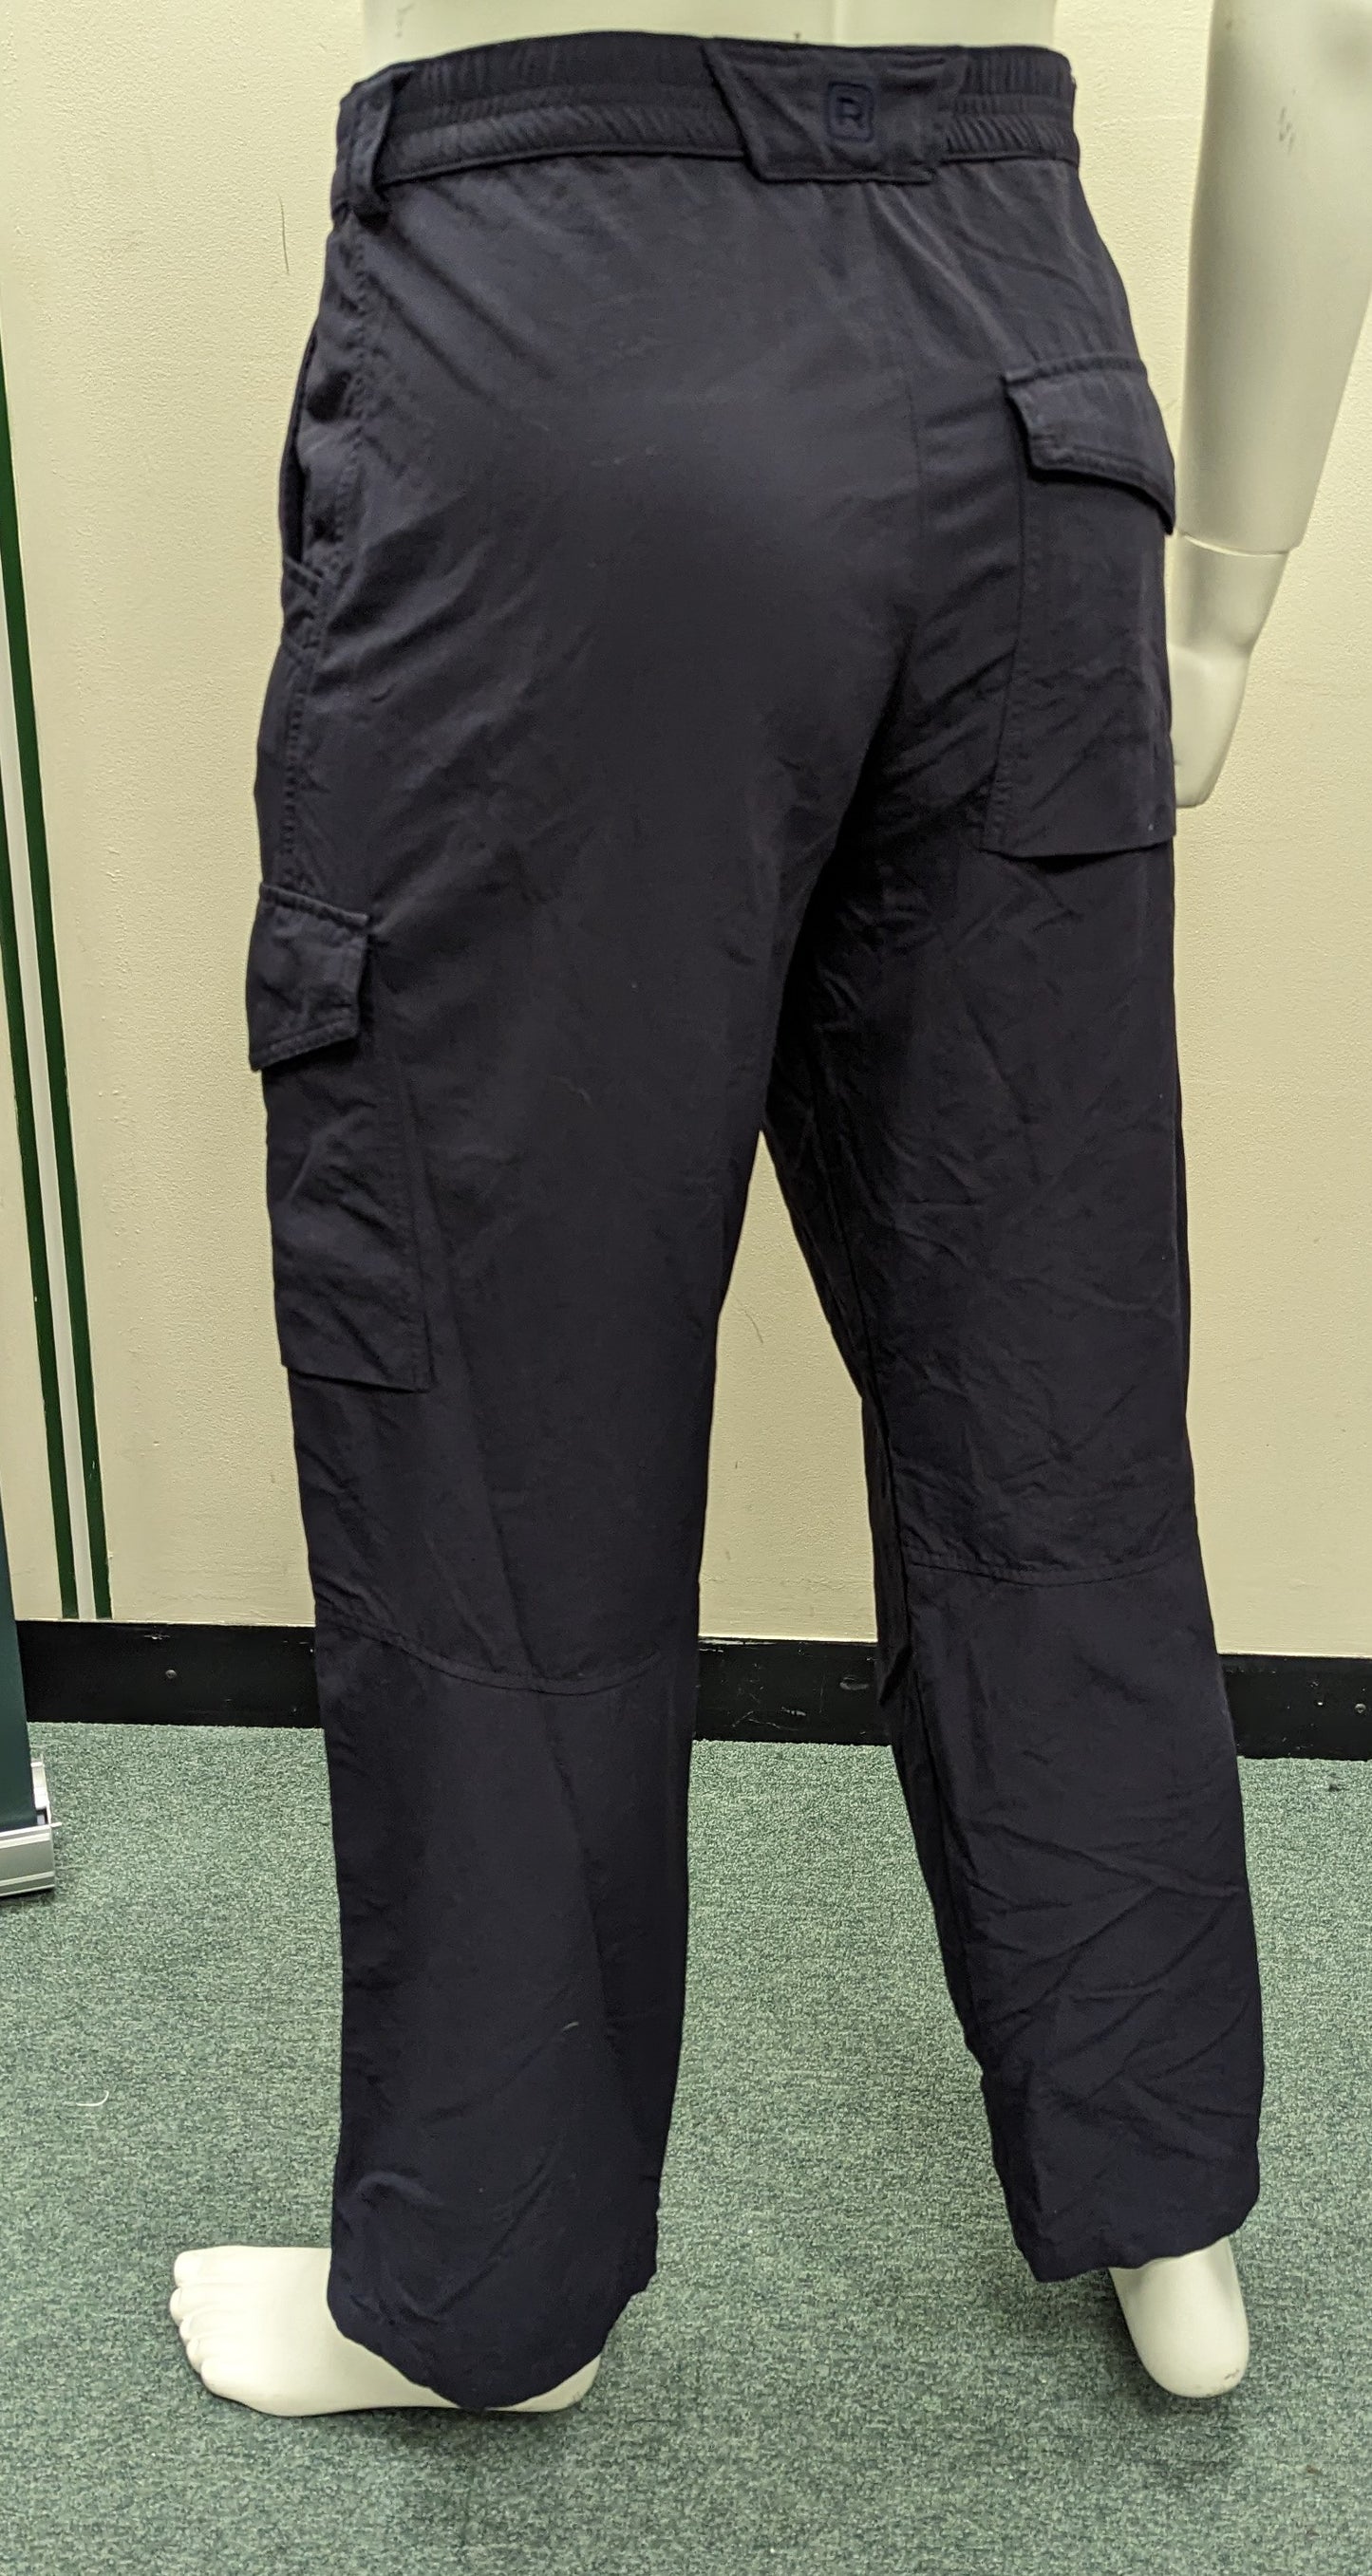 Men's Trailblazer Rohan Trousers - Unknown Size